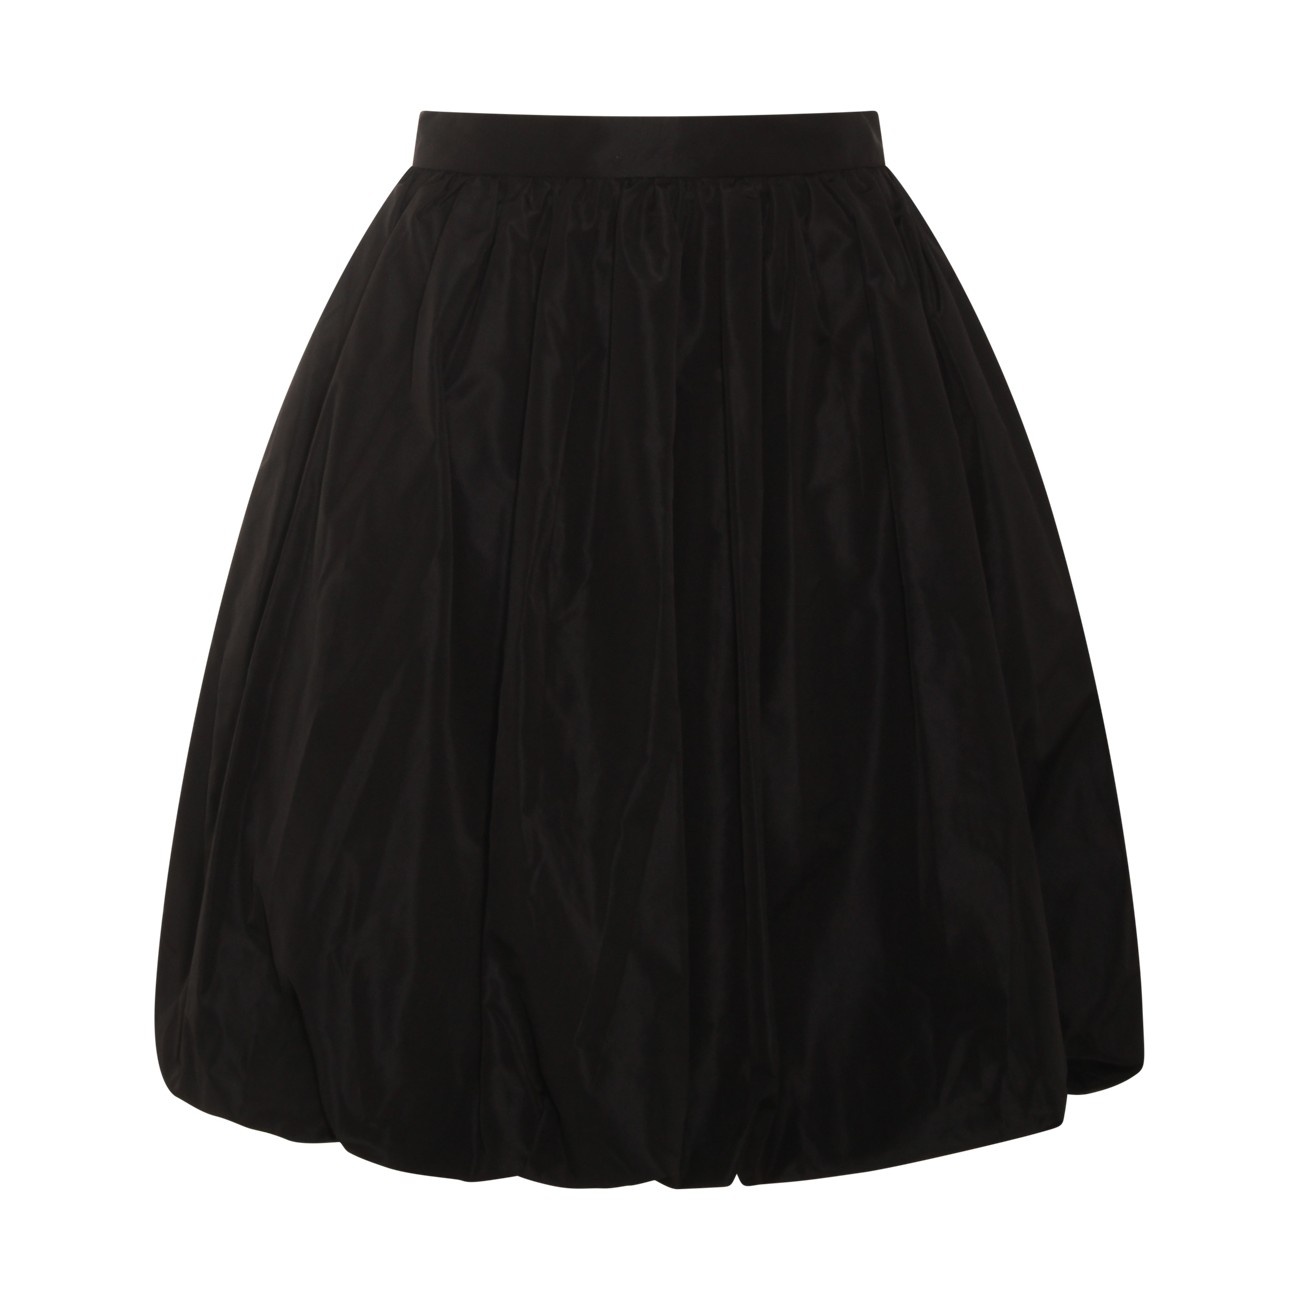 black midi skirt - 1